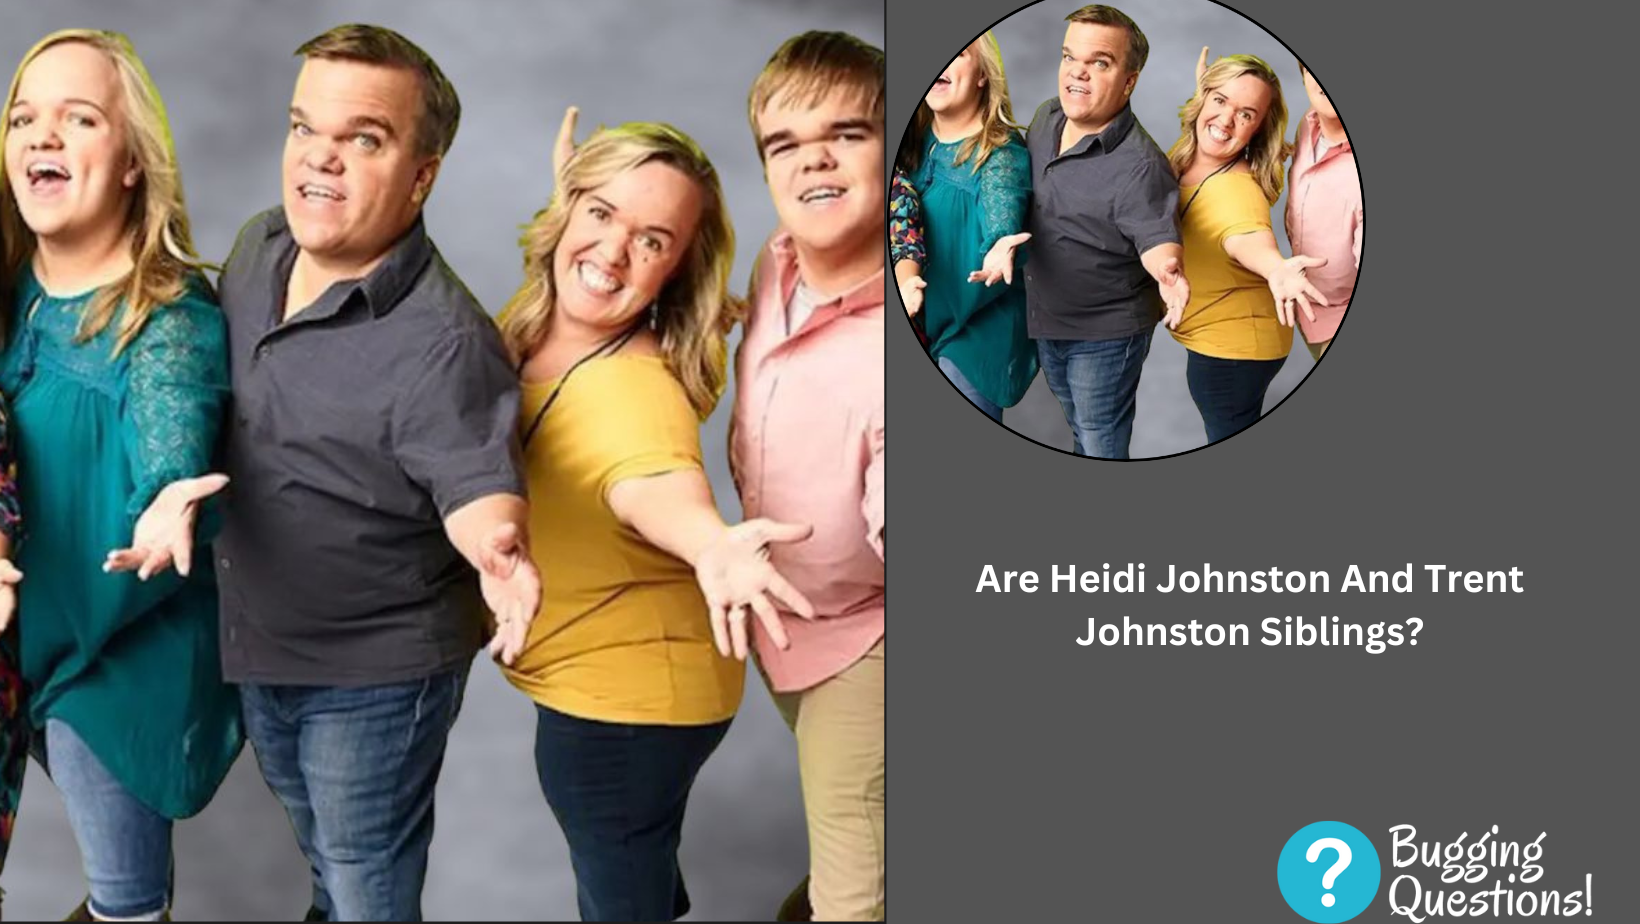 Are Heidi Johnston And Trent Johnston Siblings?